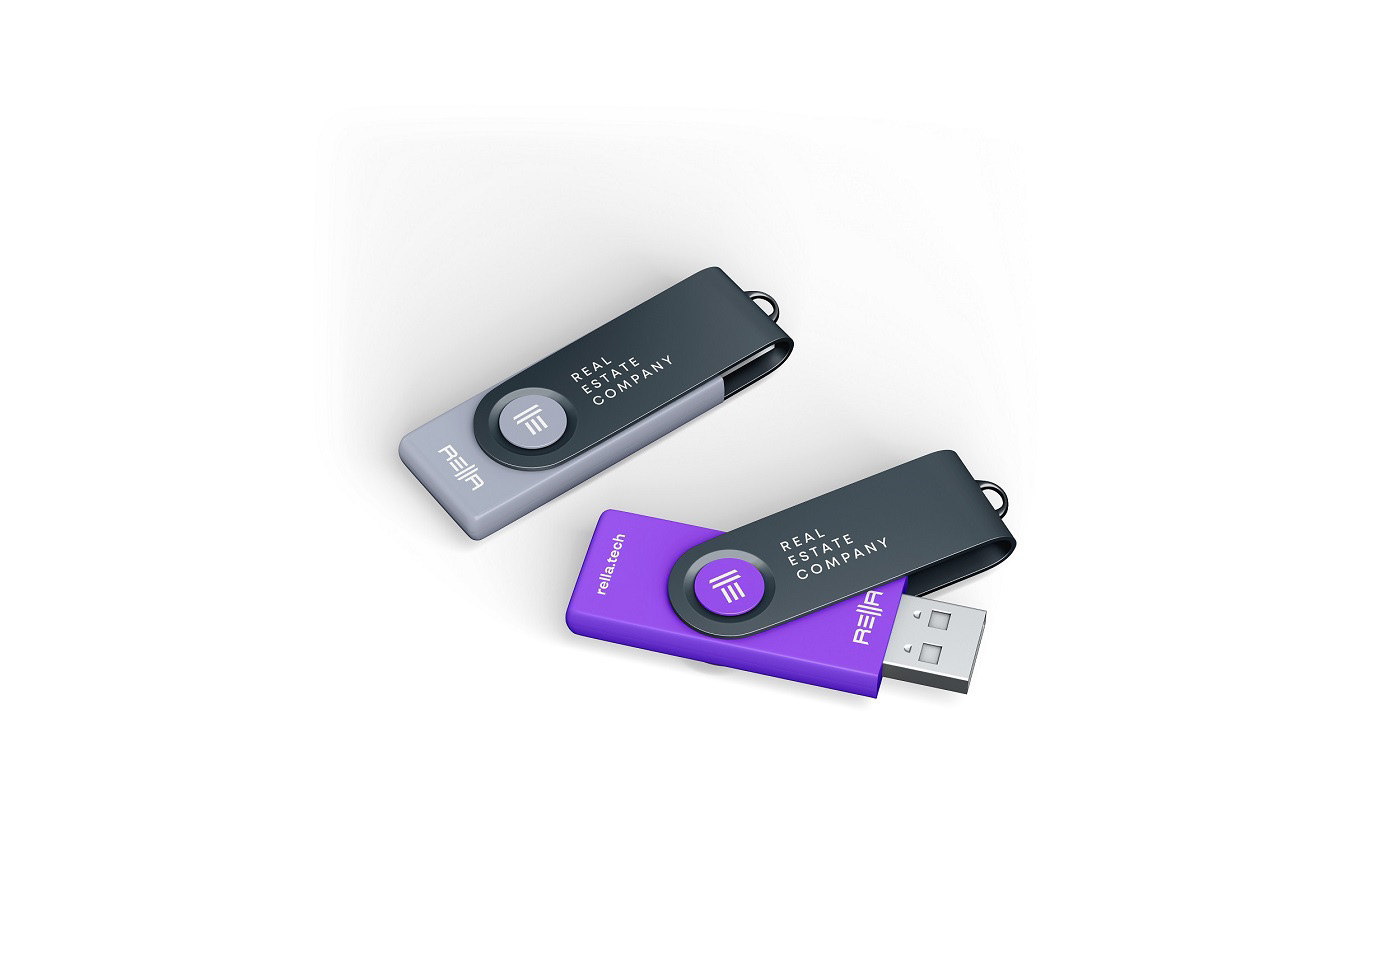 USB flash drive design